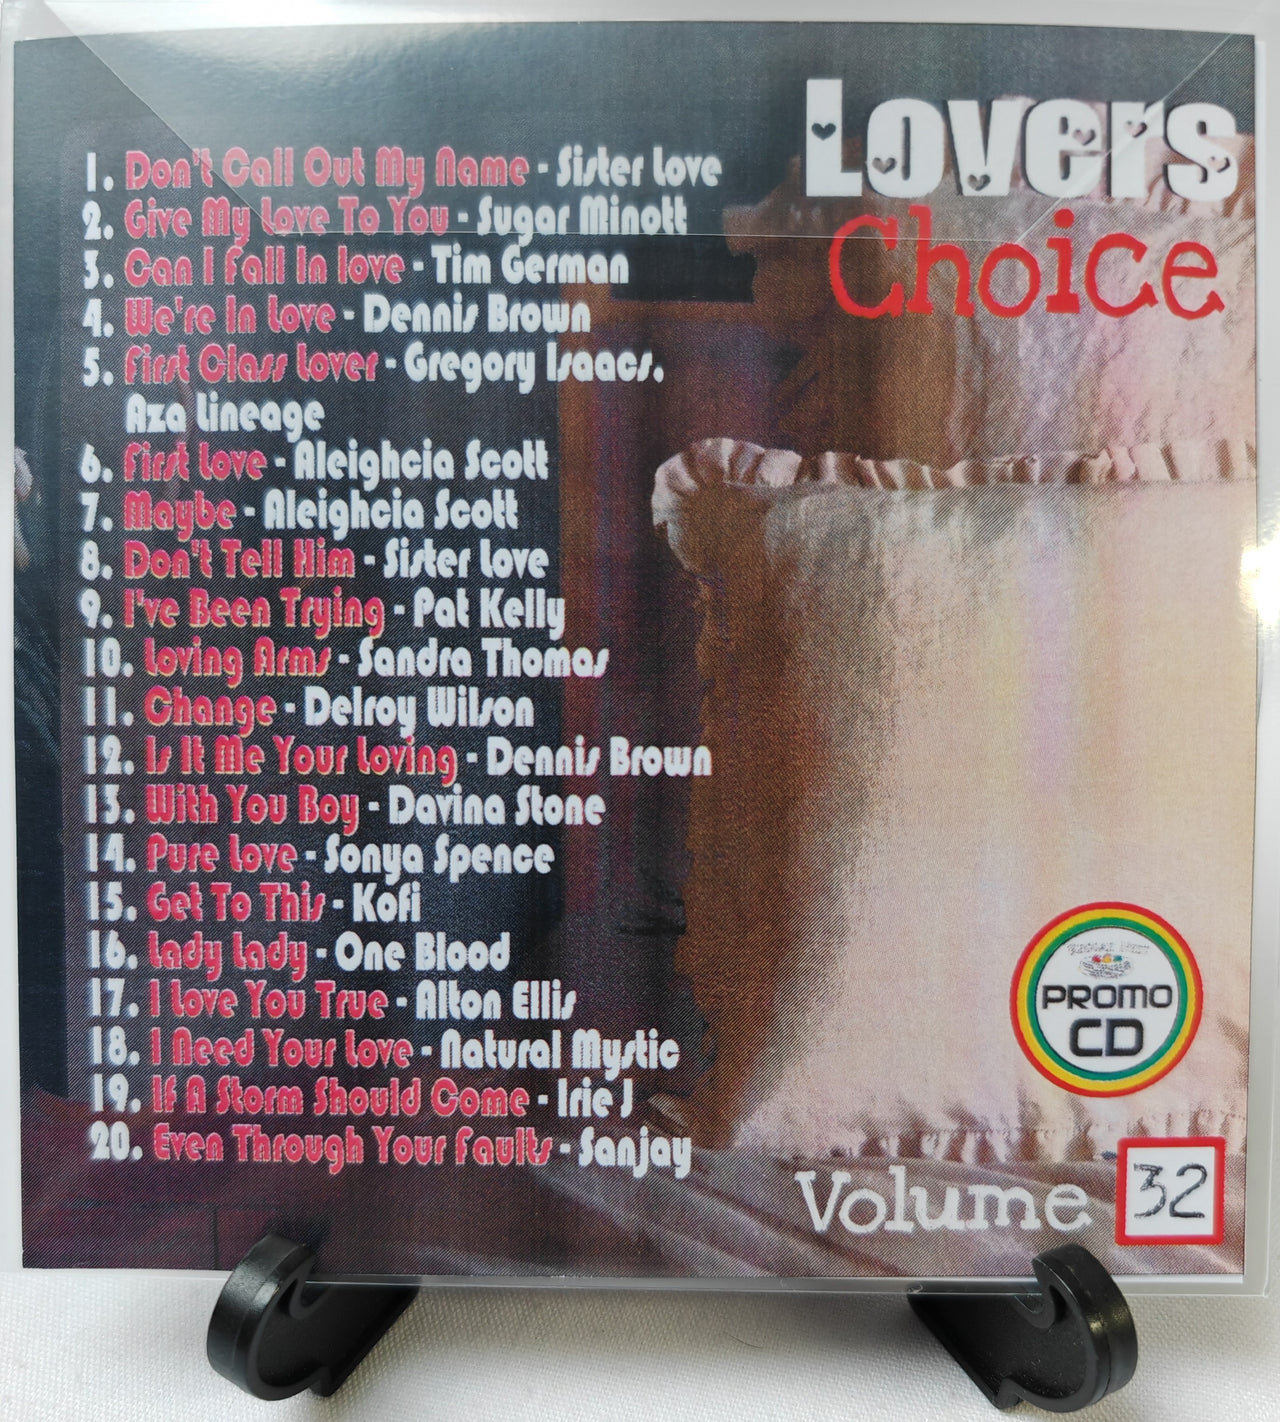 Lovers Choice Vol 32 - Superb Lovers Reggae Rubadub & Lovers Rock 2024